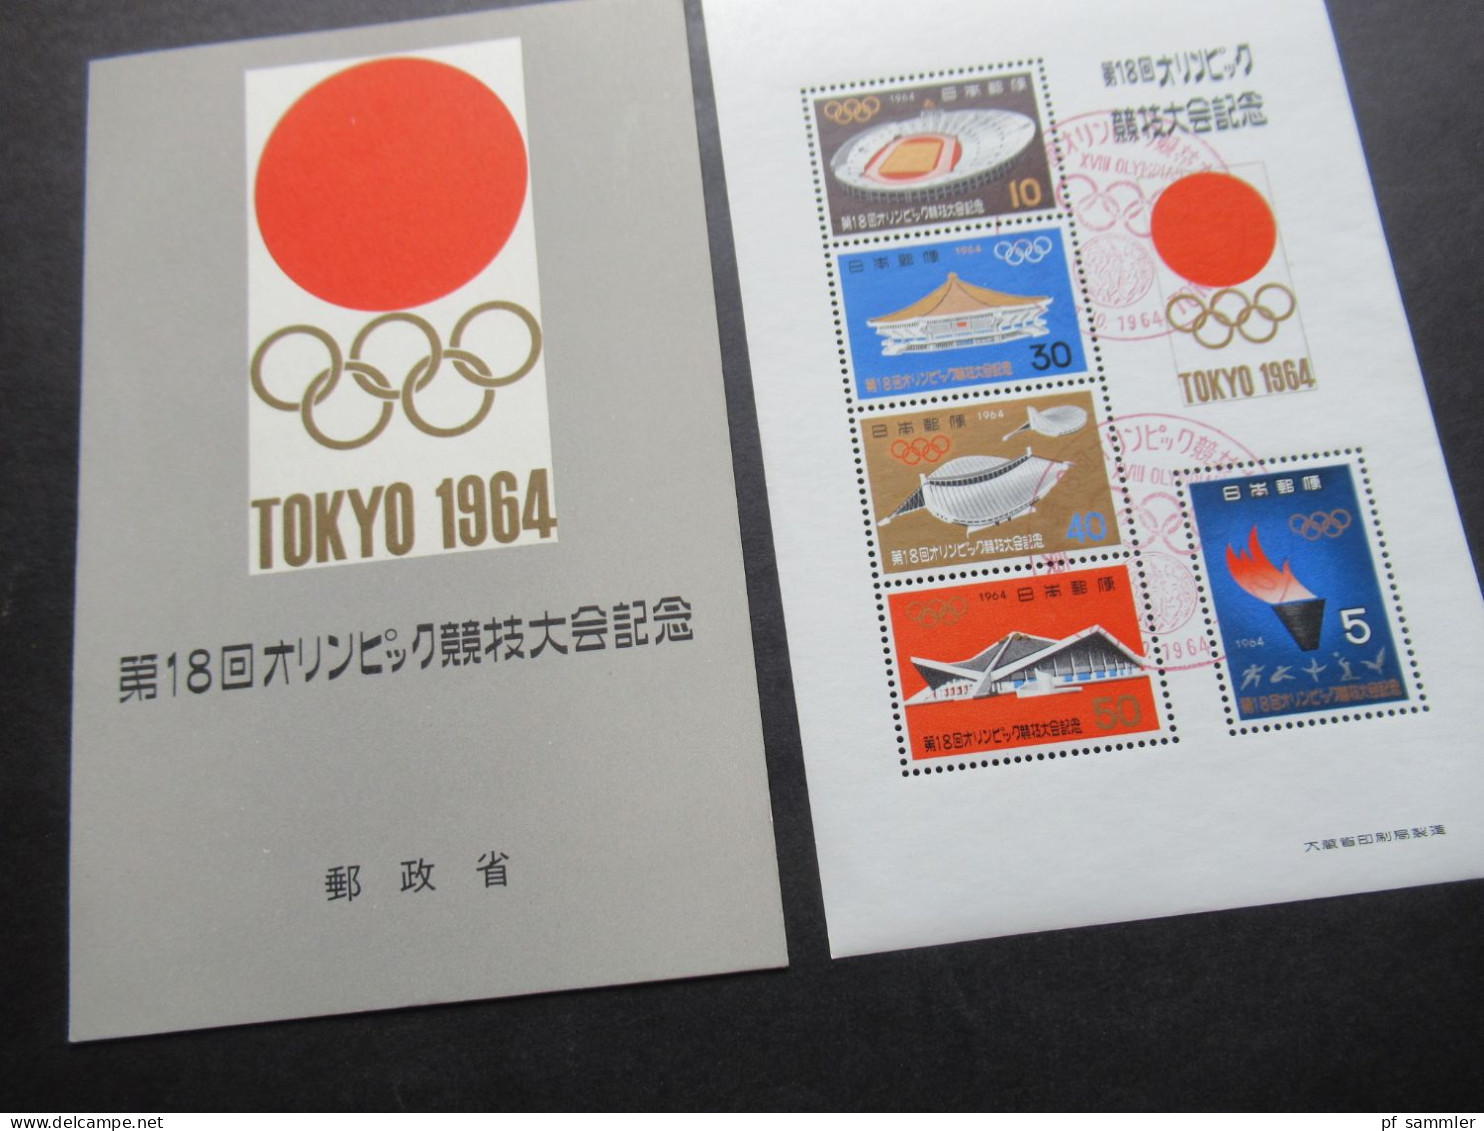 Sonderkarte / Klappkarte Mit Block Mit Rotem Sonderstempel Tokyo 1964 / Souvenir Sheet - Covers & Documents